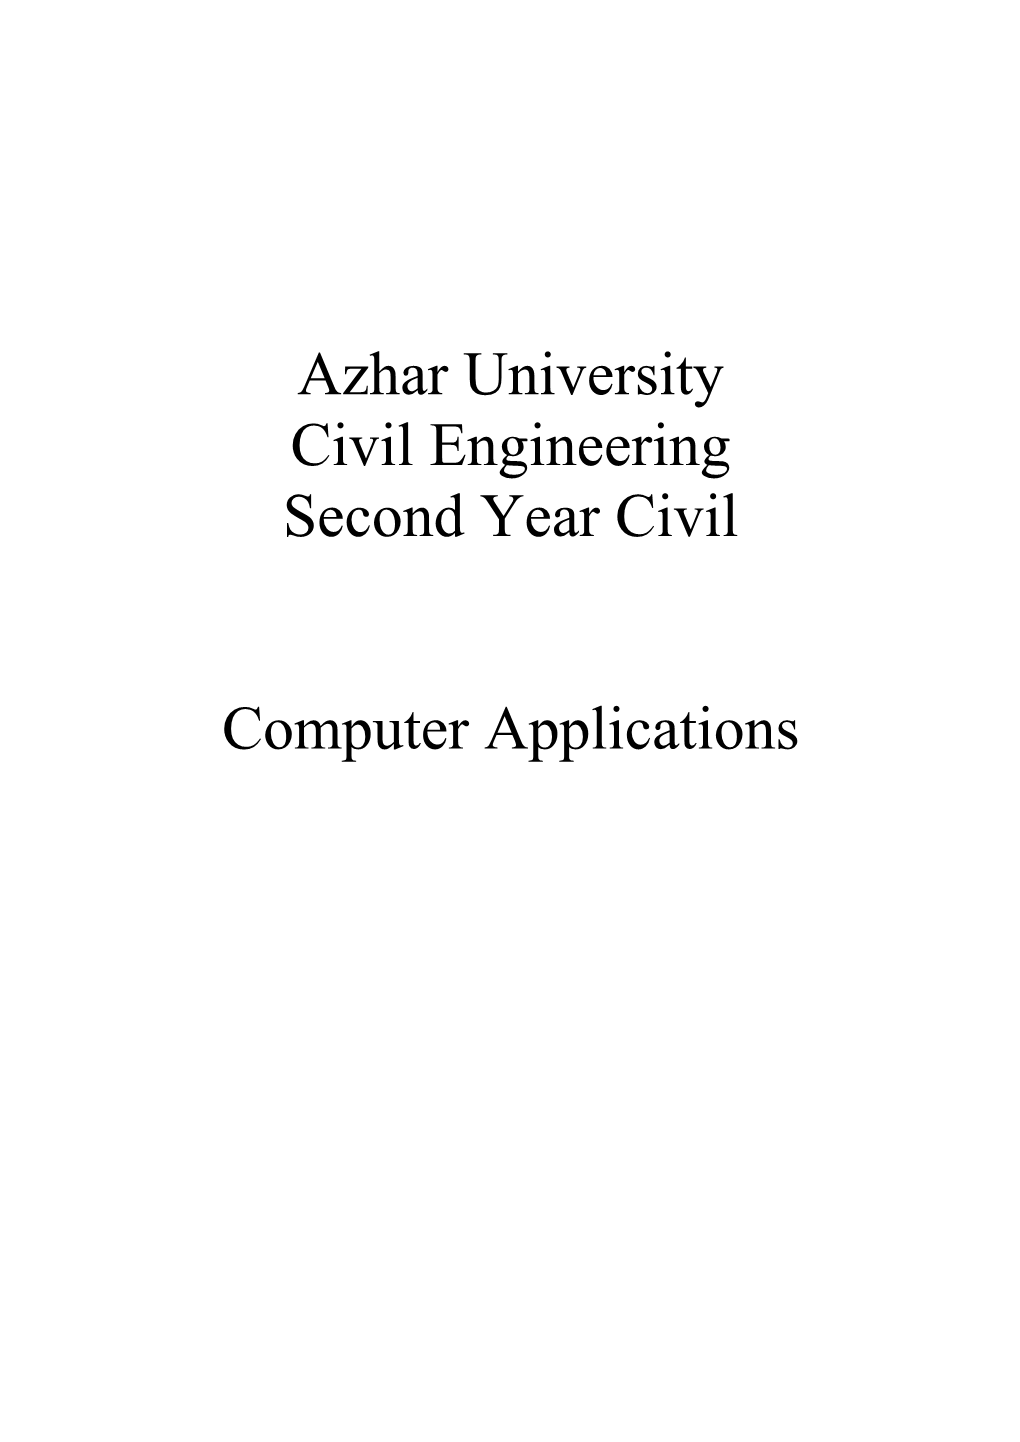 Azhar University Civil Engineering Second Year Civil Computer